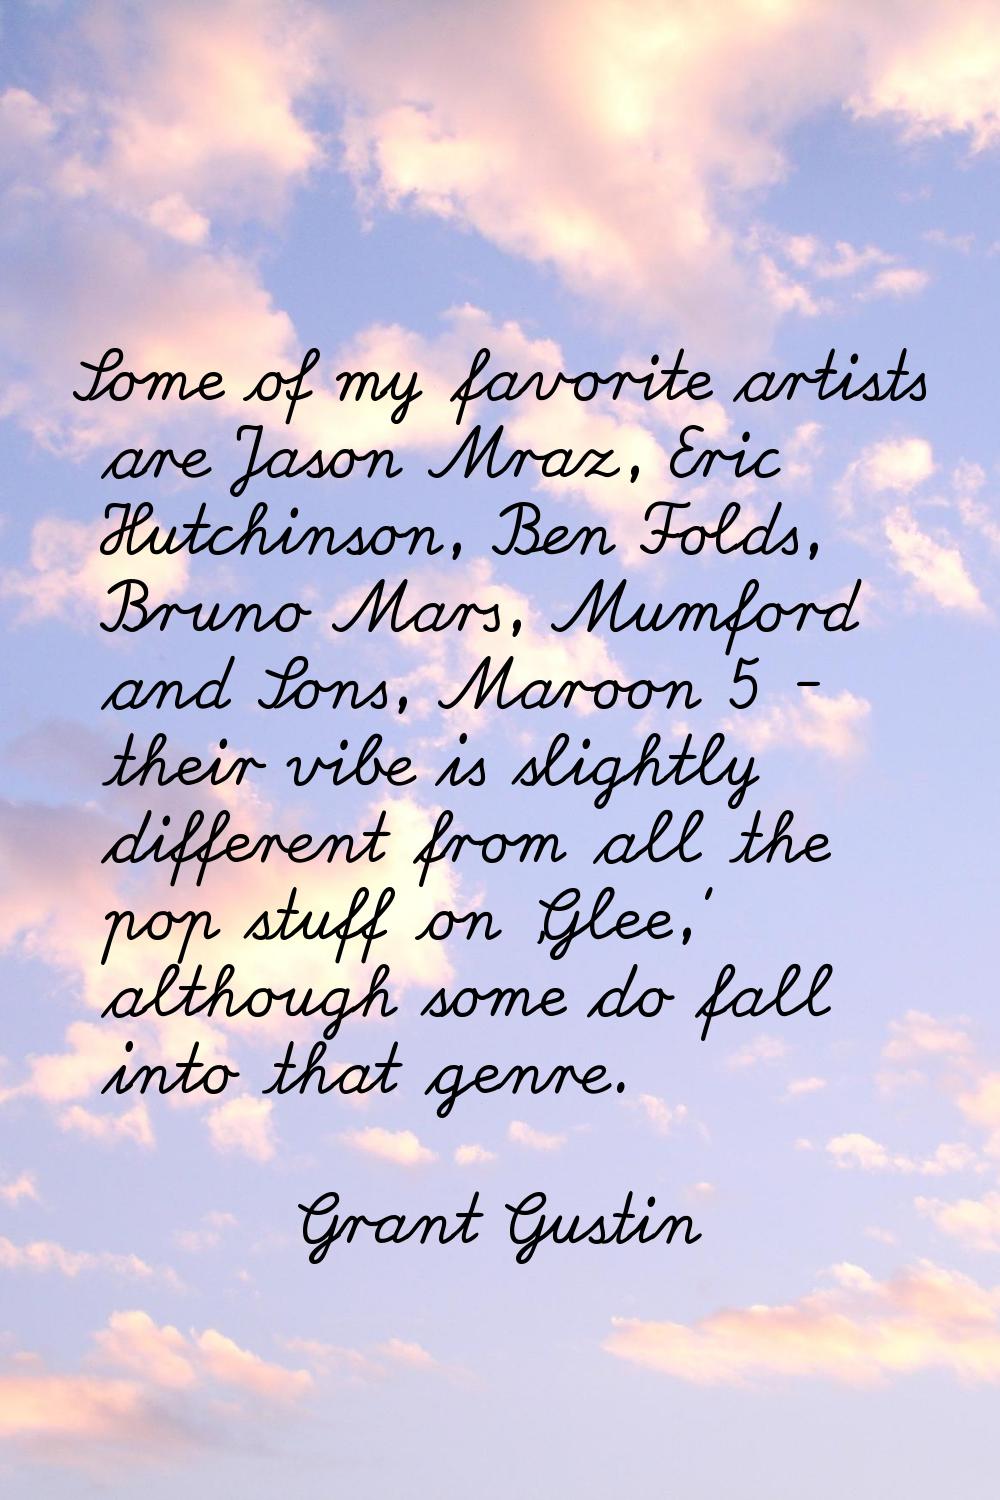 Some of my favorite artists are Jason Mraz, Eric Hutchinson, Ben Folds, Bruno Mars, Mumford and Son